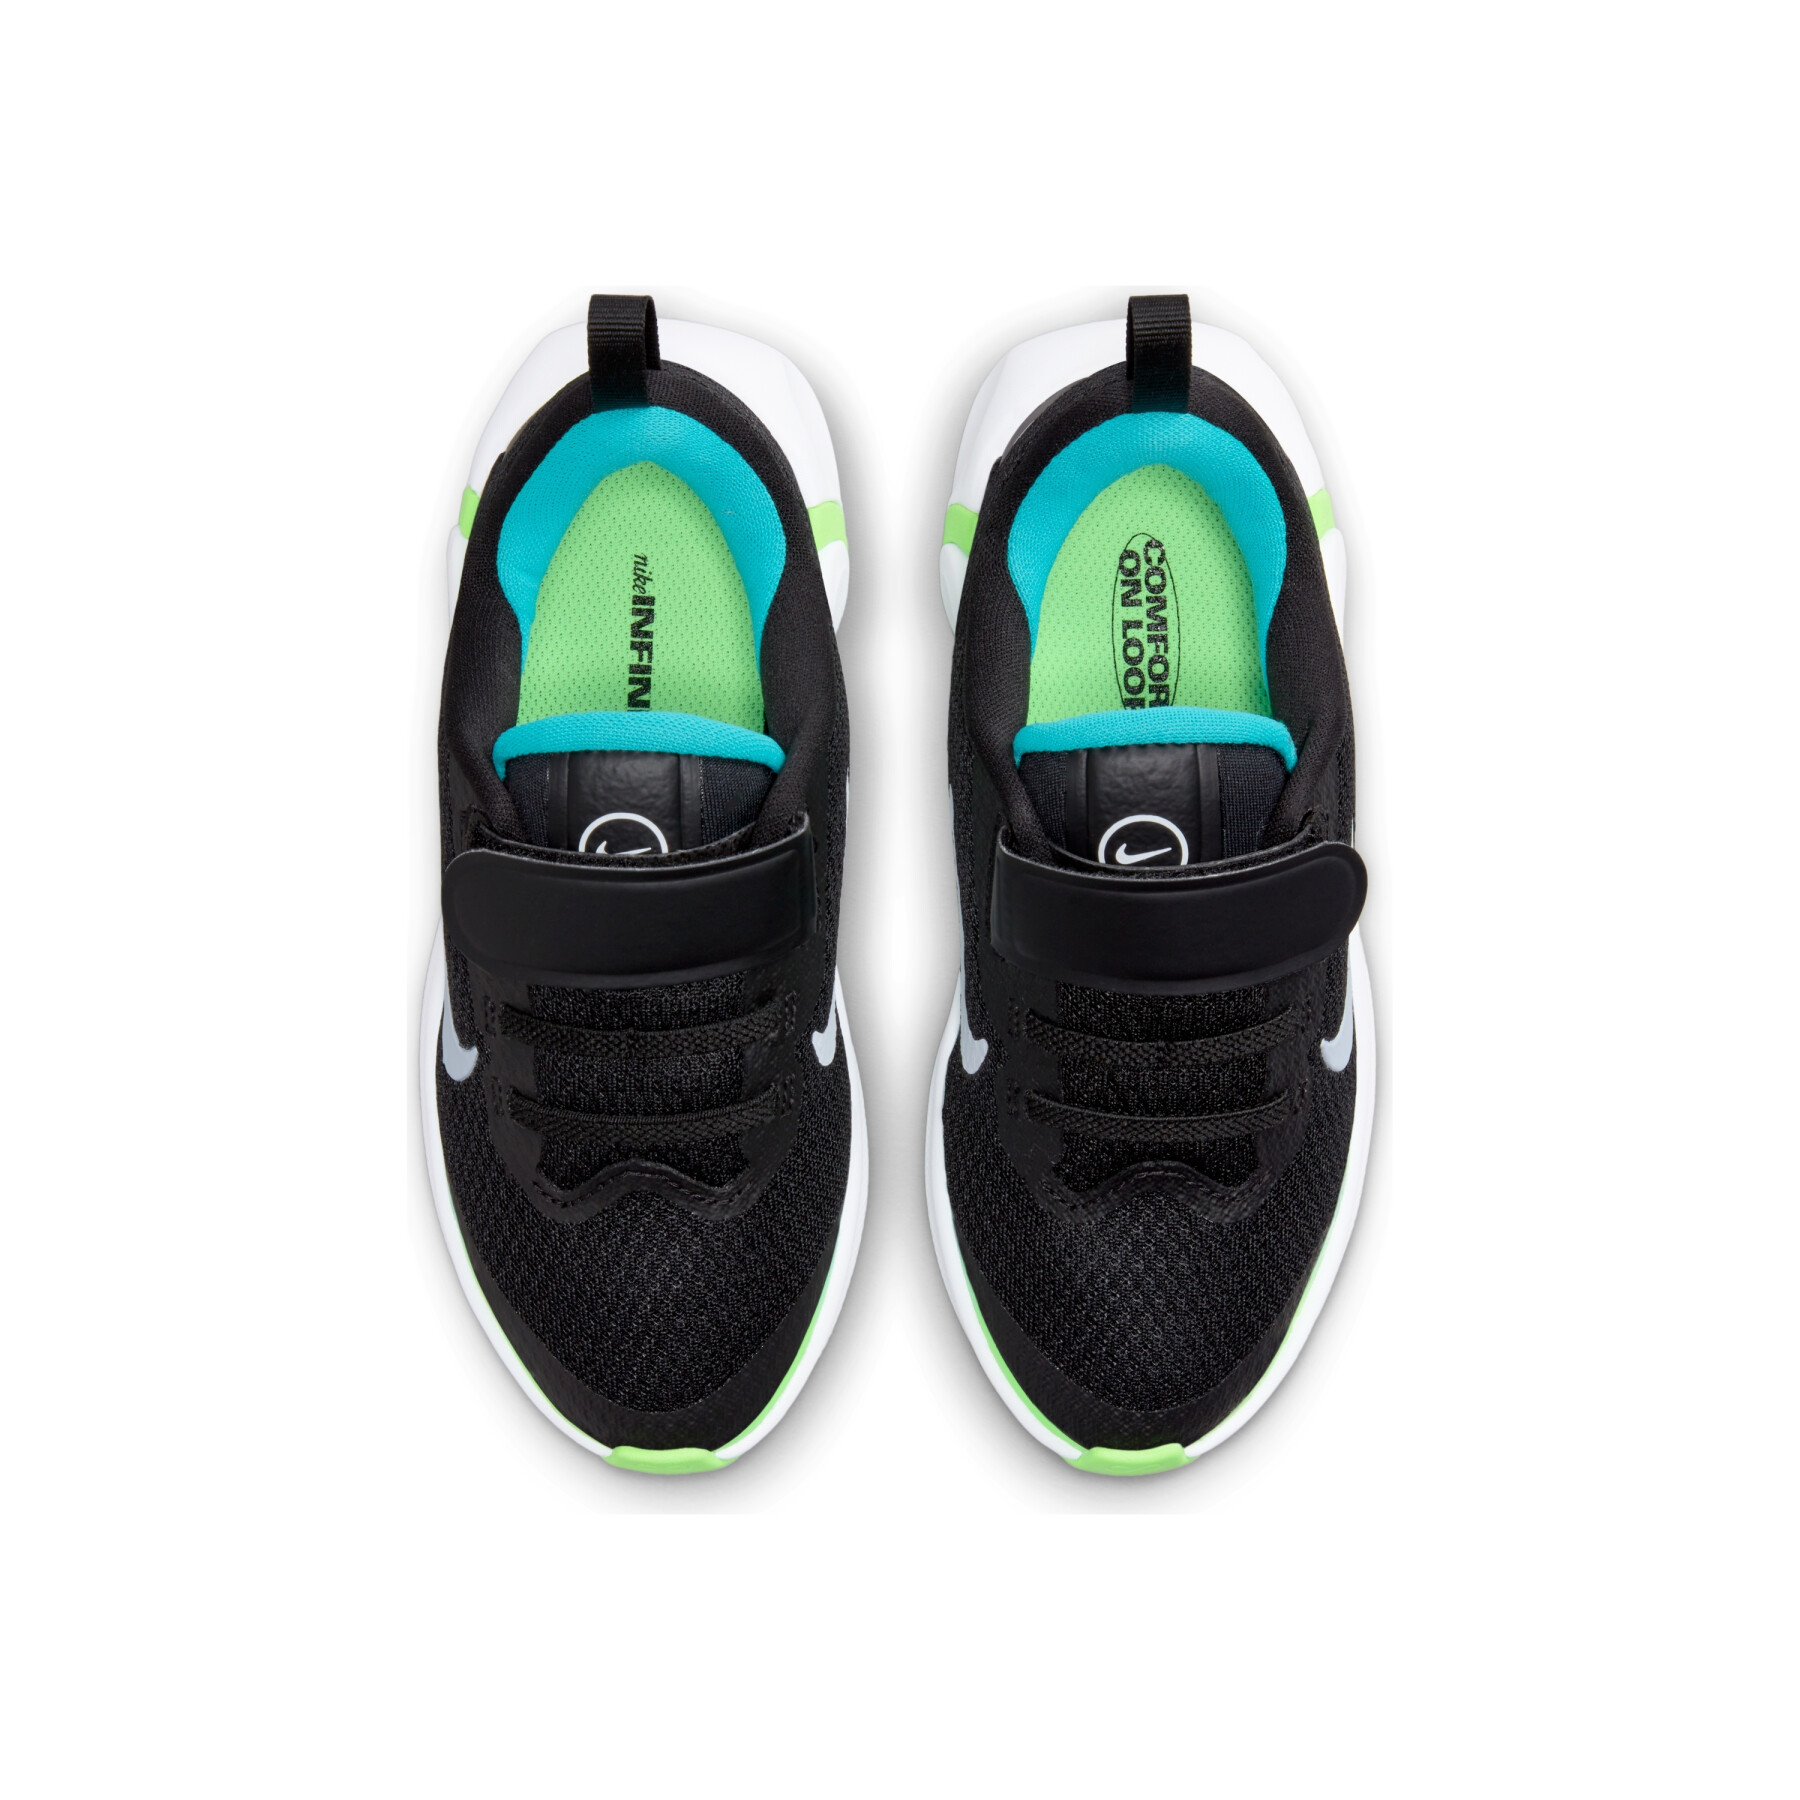 Kinder-Laufschuhe Nike Infinity Flow